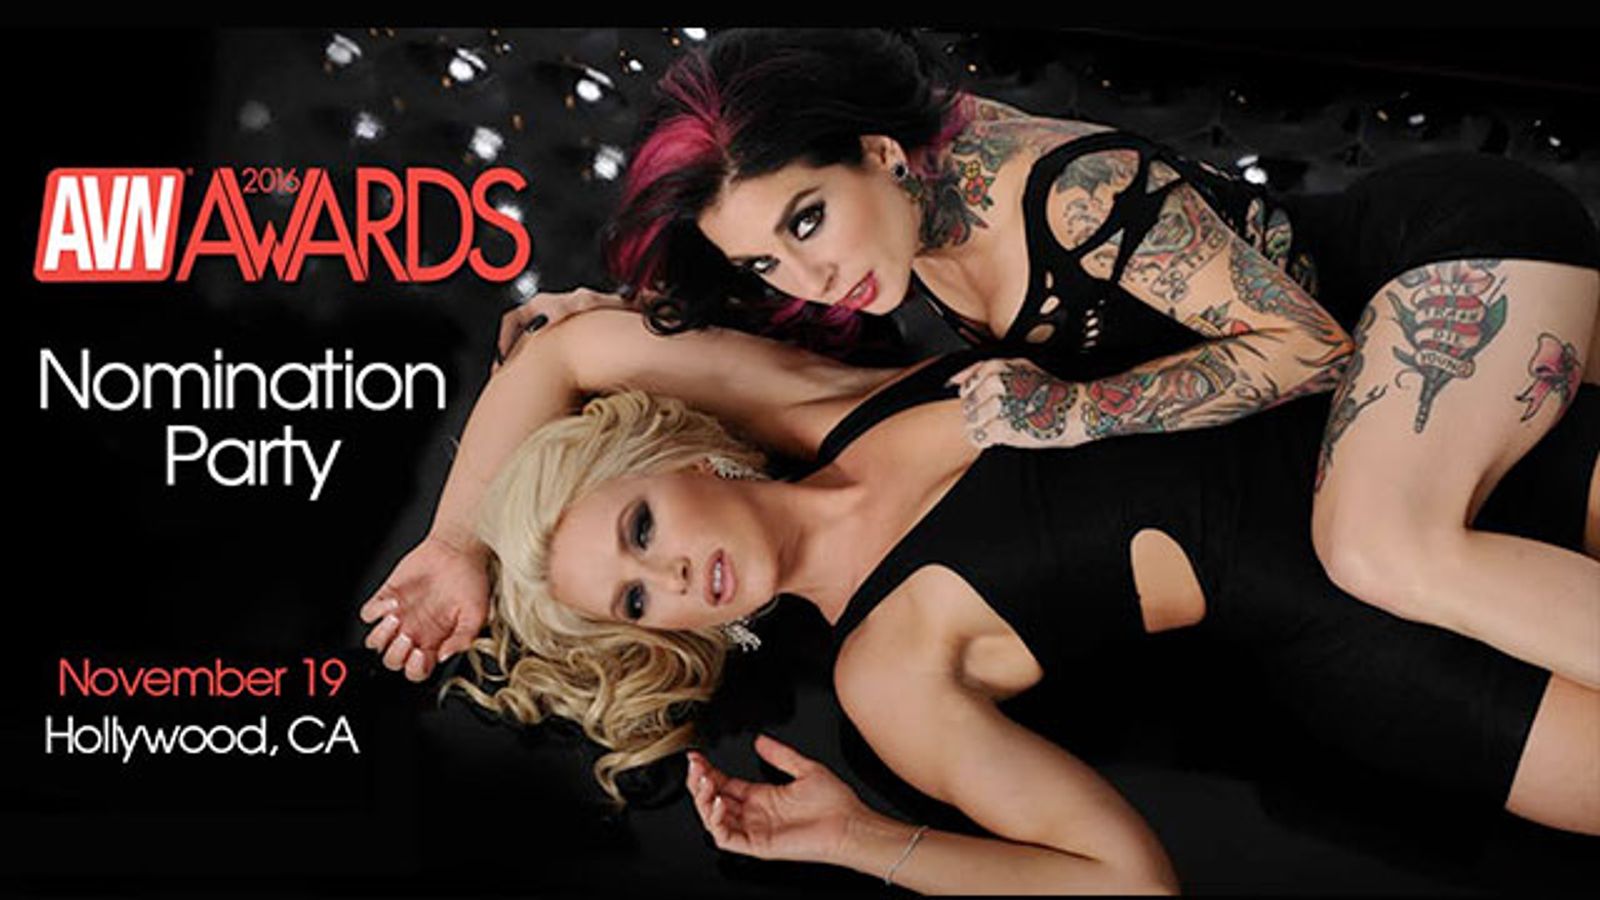 AVN Announces 2016 AVN Awards Nomination Party on Nov. 19